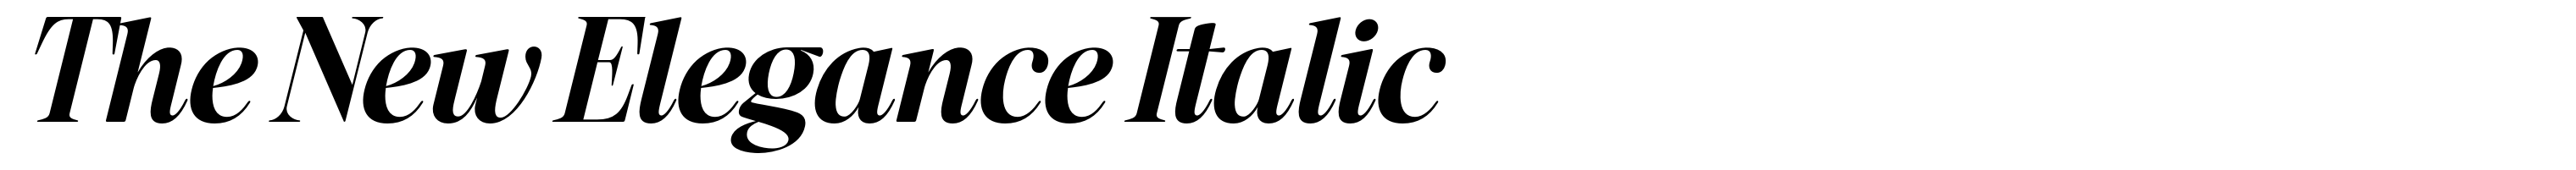 The New Elegance Italic